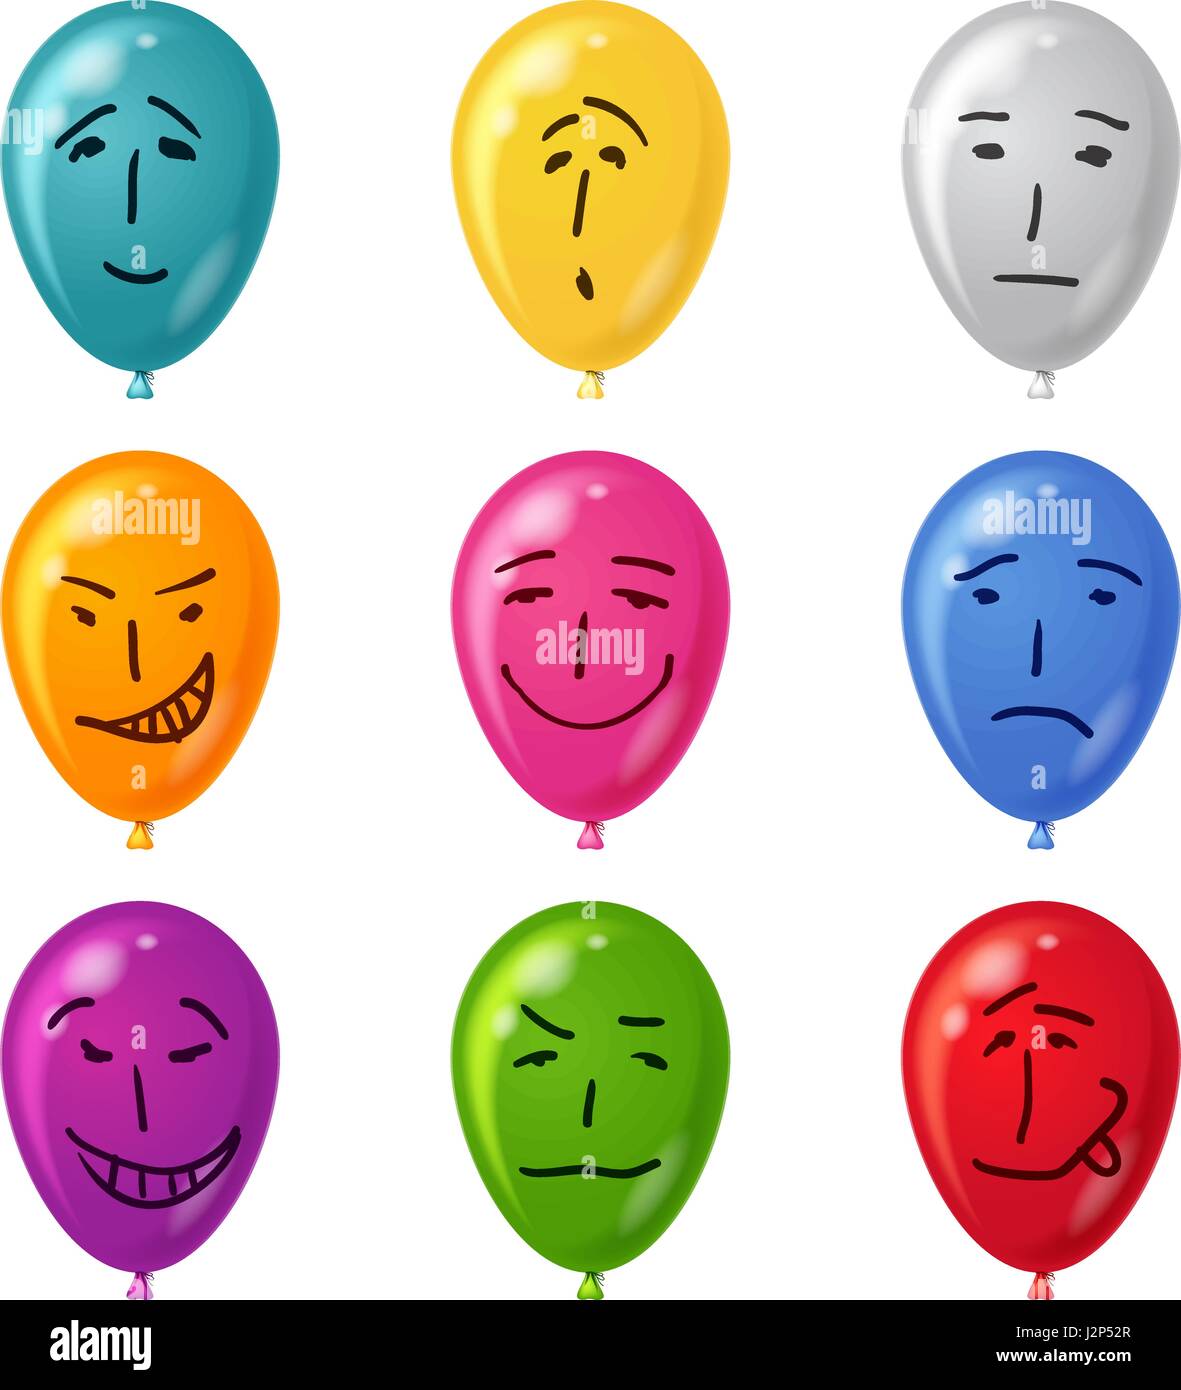 Orange Balloon Drawing Scared Face On Stock Photo 1519105115